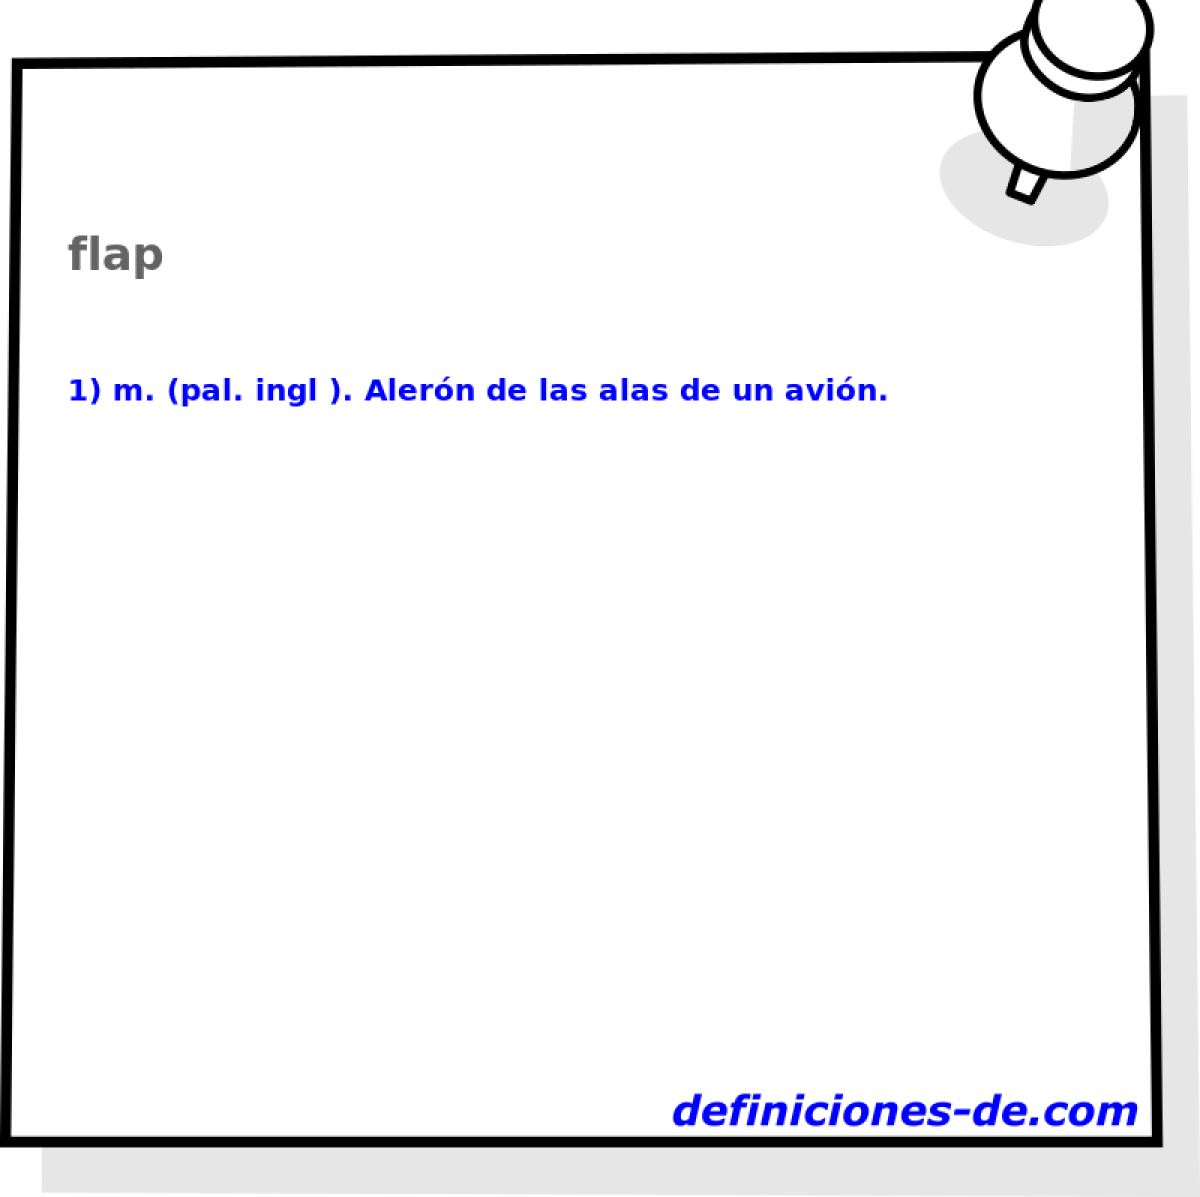 flap 